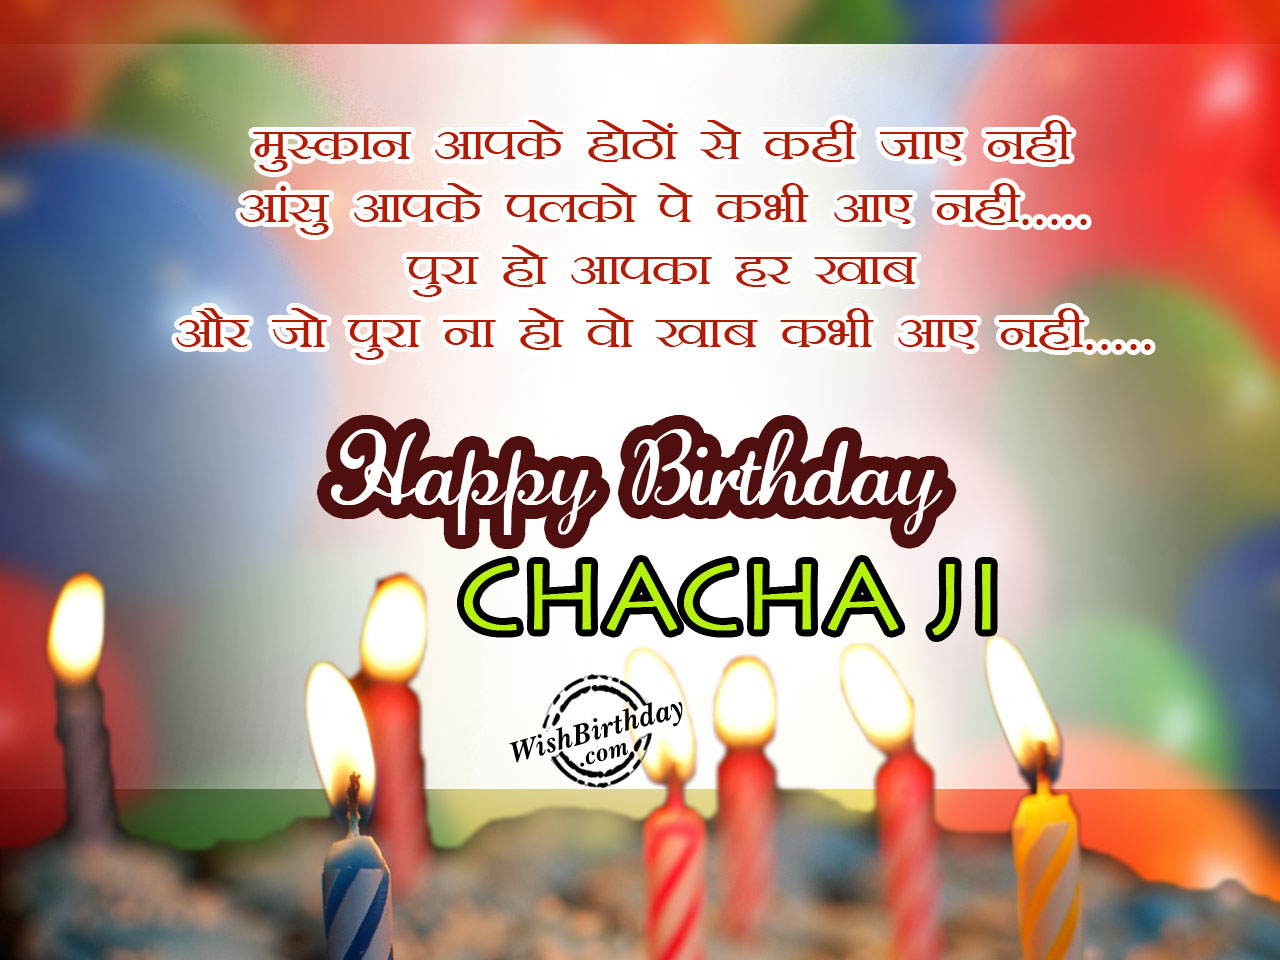 Birthday Wishes For Chachu, Chacha Ji